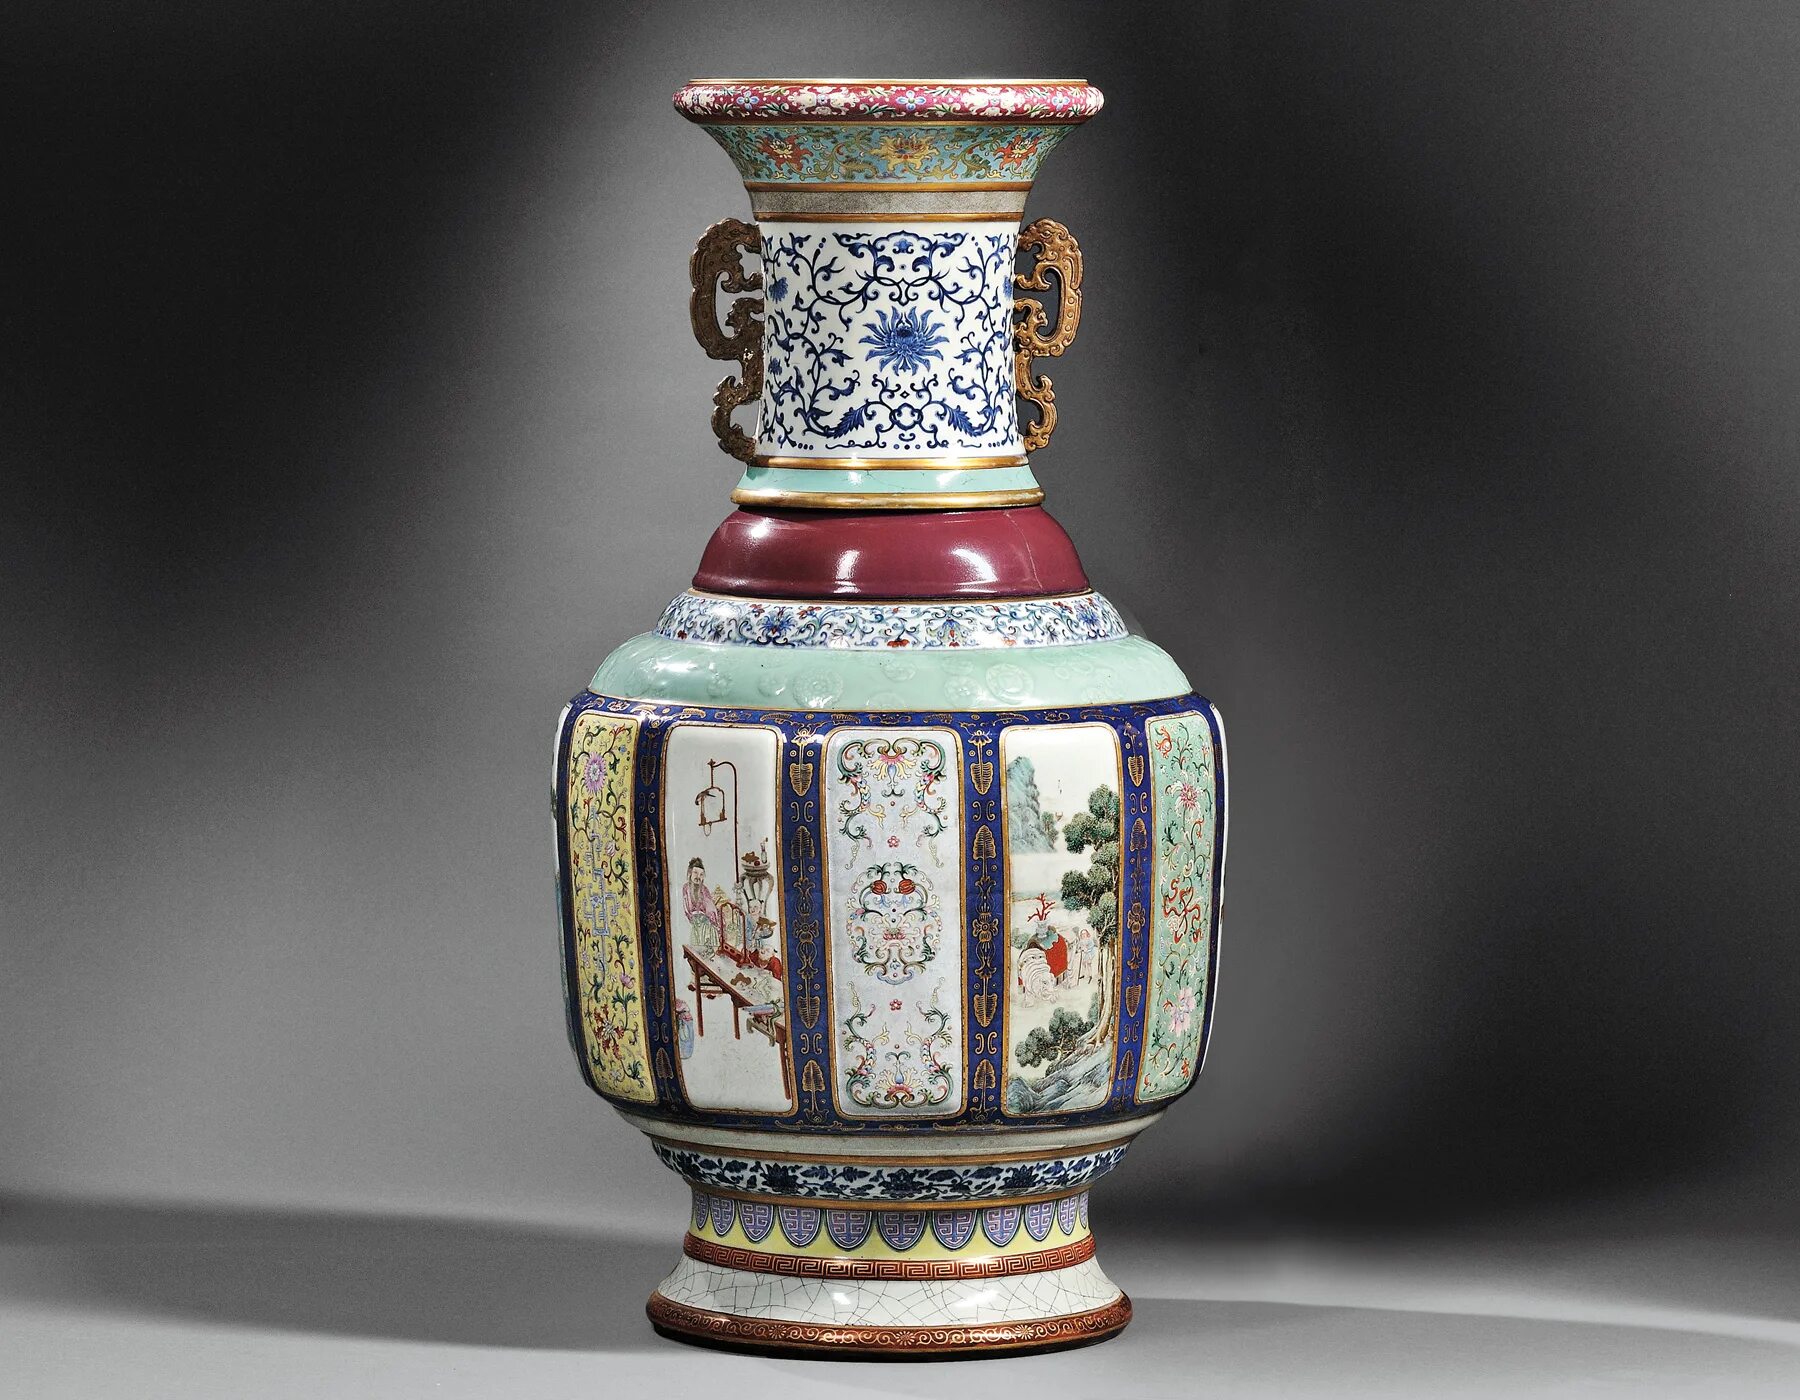 Керамика династии Цинь. Китайский фарфор Династия Qing. Китайские вазы династии Цинь. Китайская ваза династии Цин.